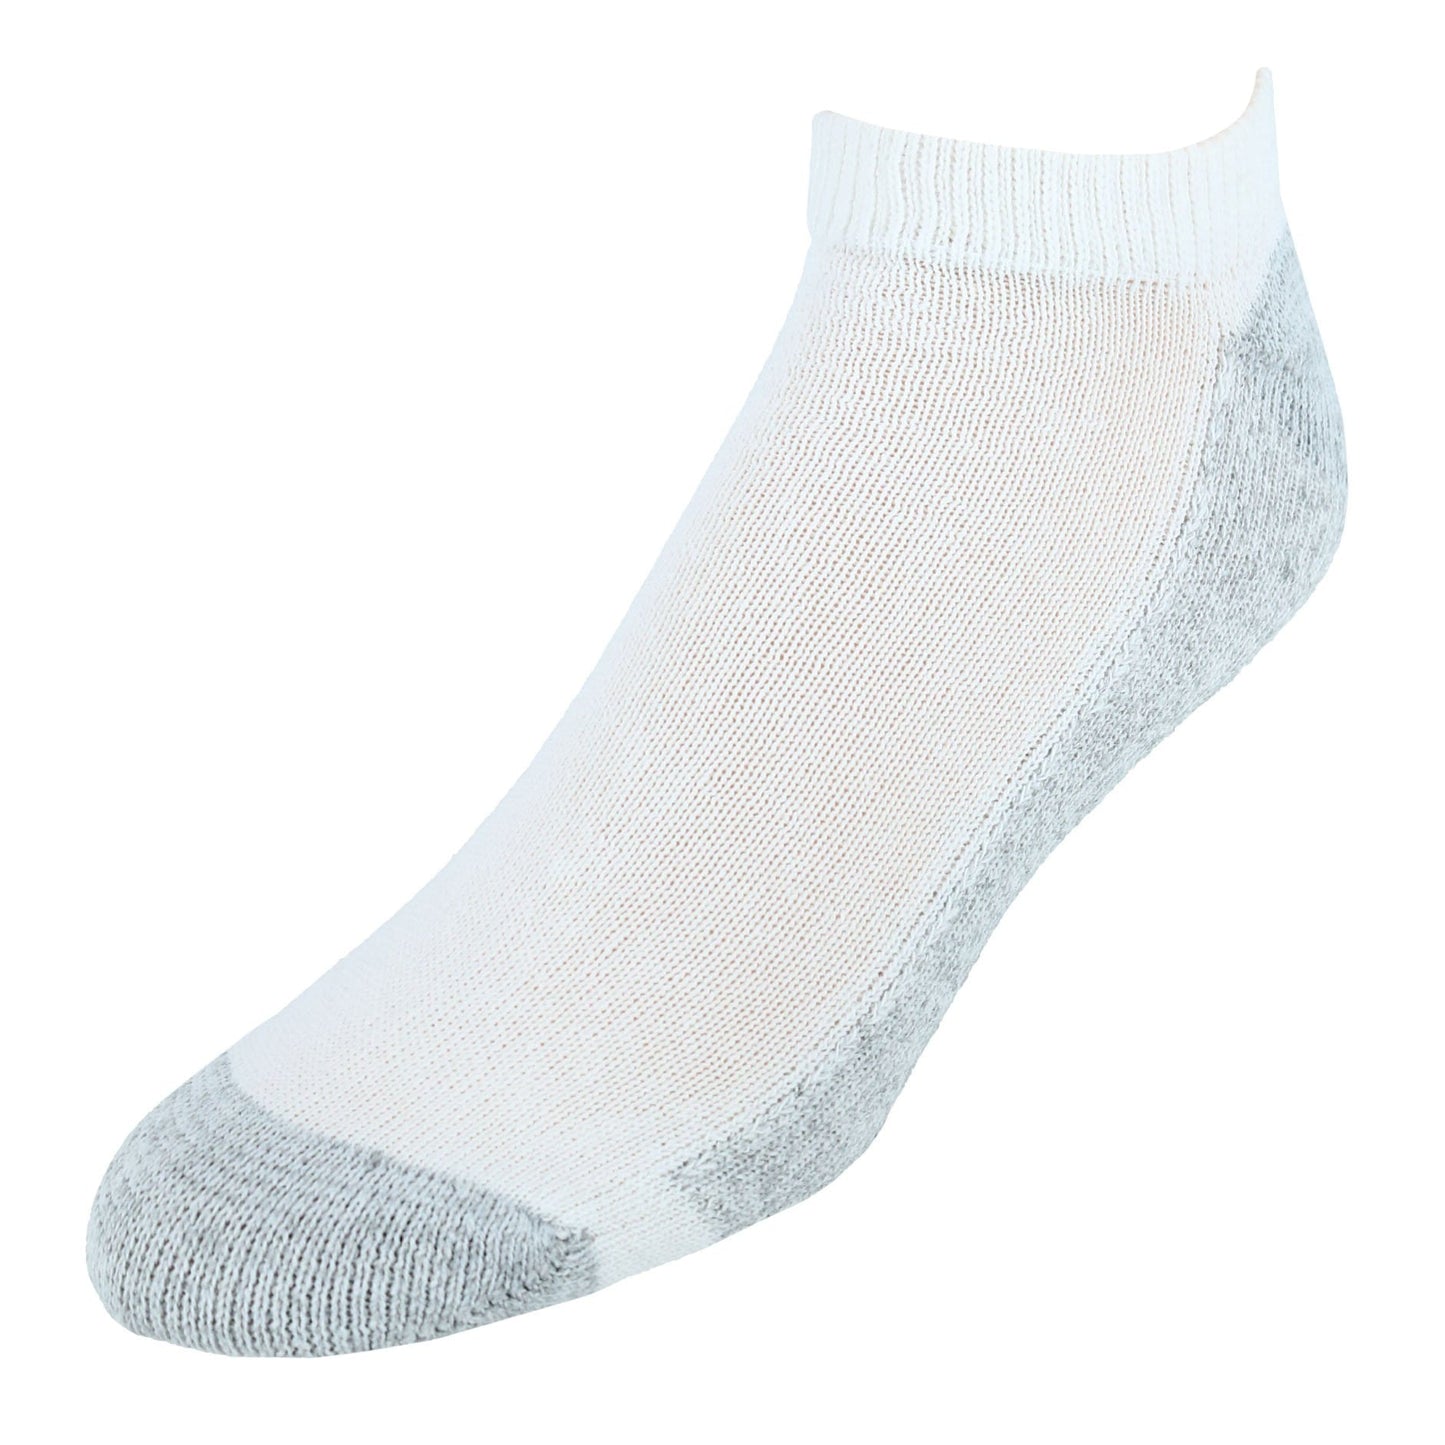 Hanes Men's Cushion No-Show Socks 6-Pack